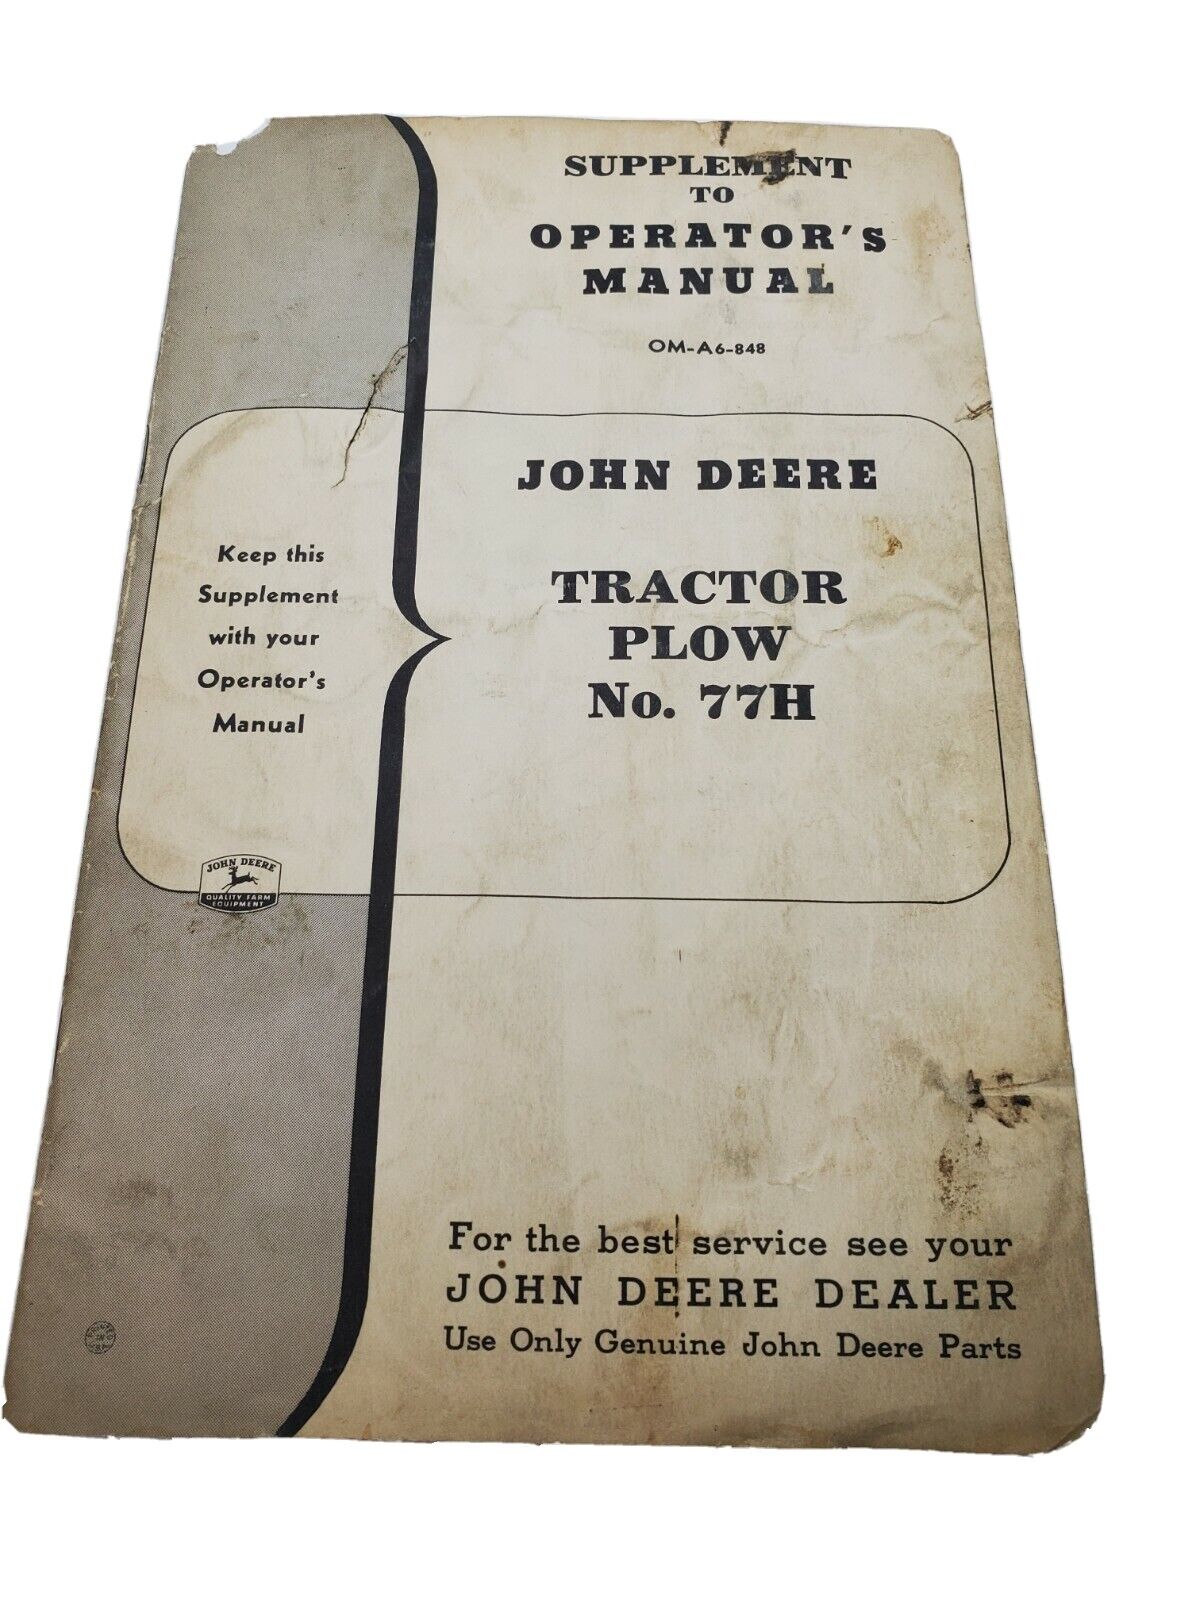 Original John Deere Manual Tractor Plow No. 77H OM-A6-848